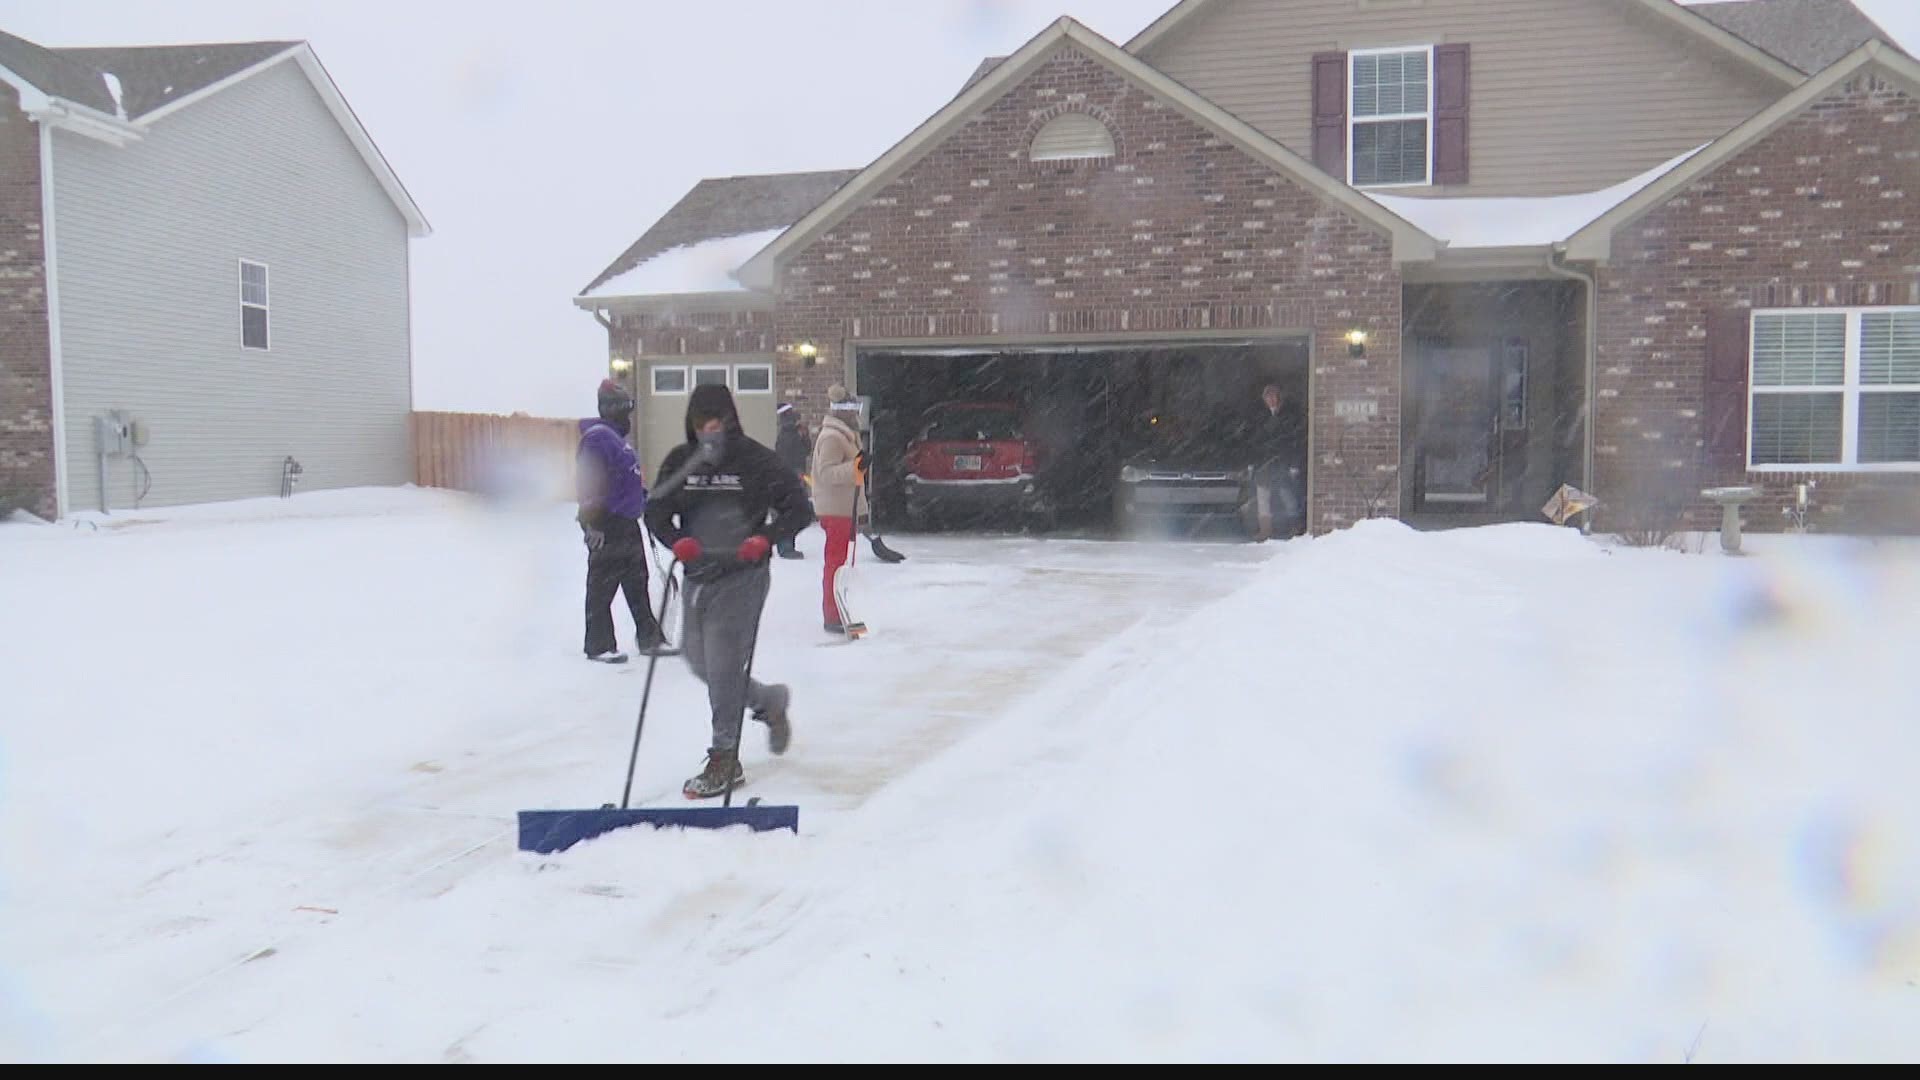 Snow shovels got an unusually vigorous workout in some neighborhoods Monday.